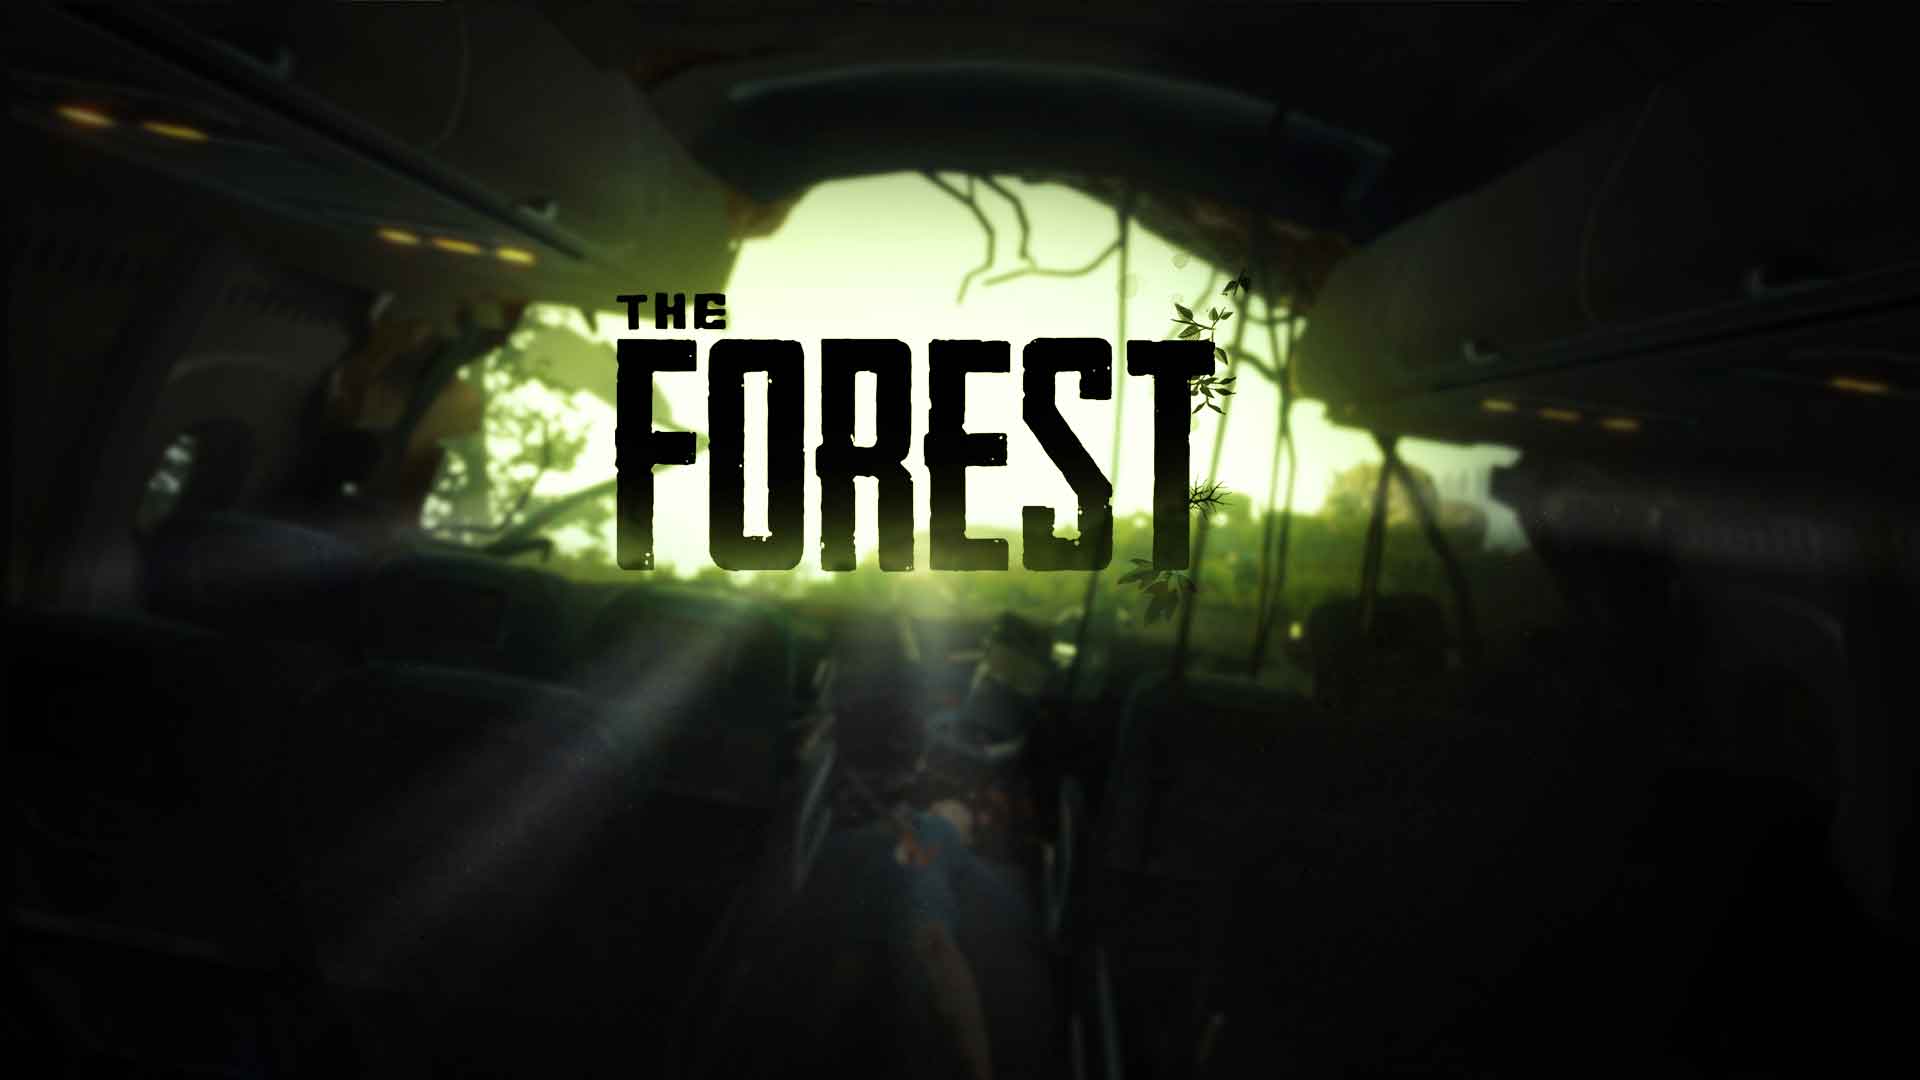 Sons of The Forest requisitos para PC: así podrás jugar la